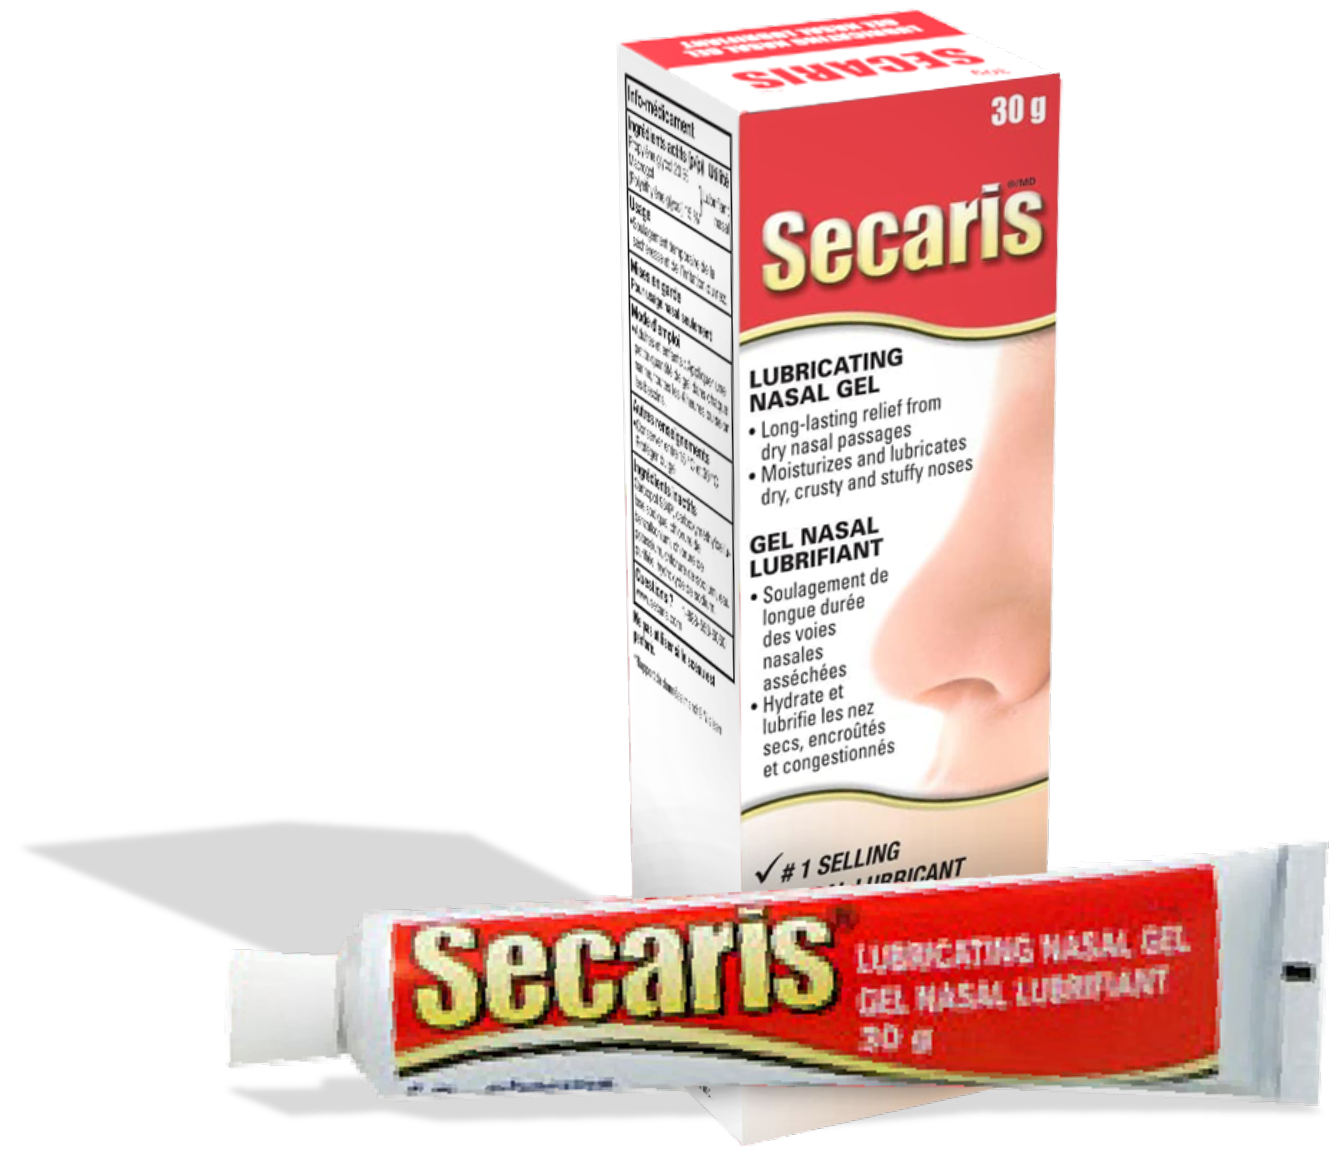 Discover Secaris